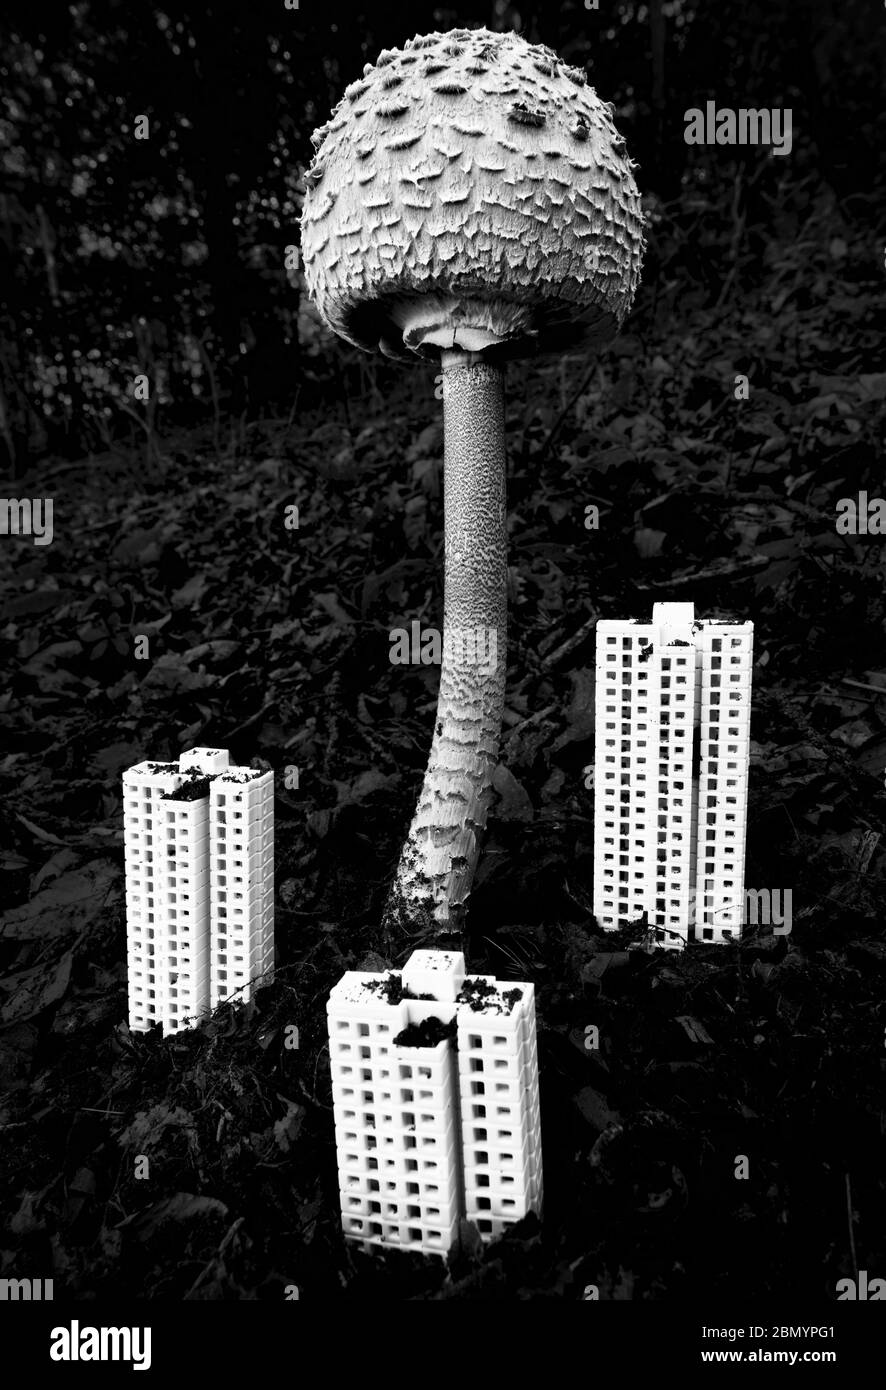 Giant atomic fungus near skyscrapers Stock Photo